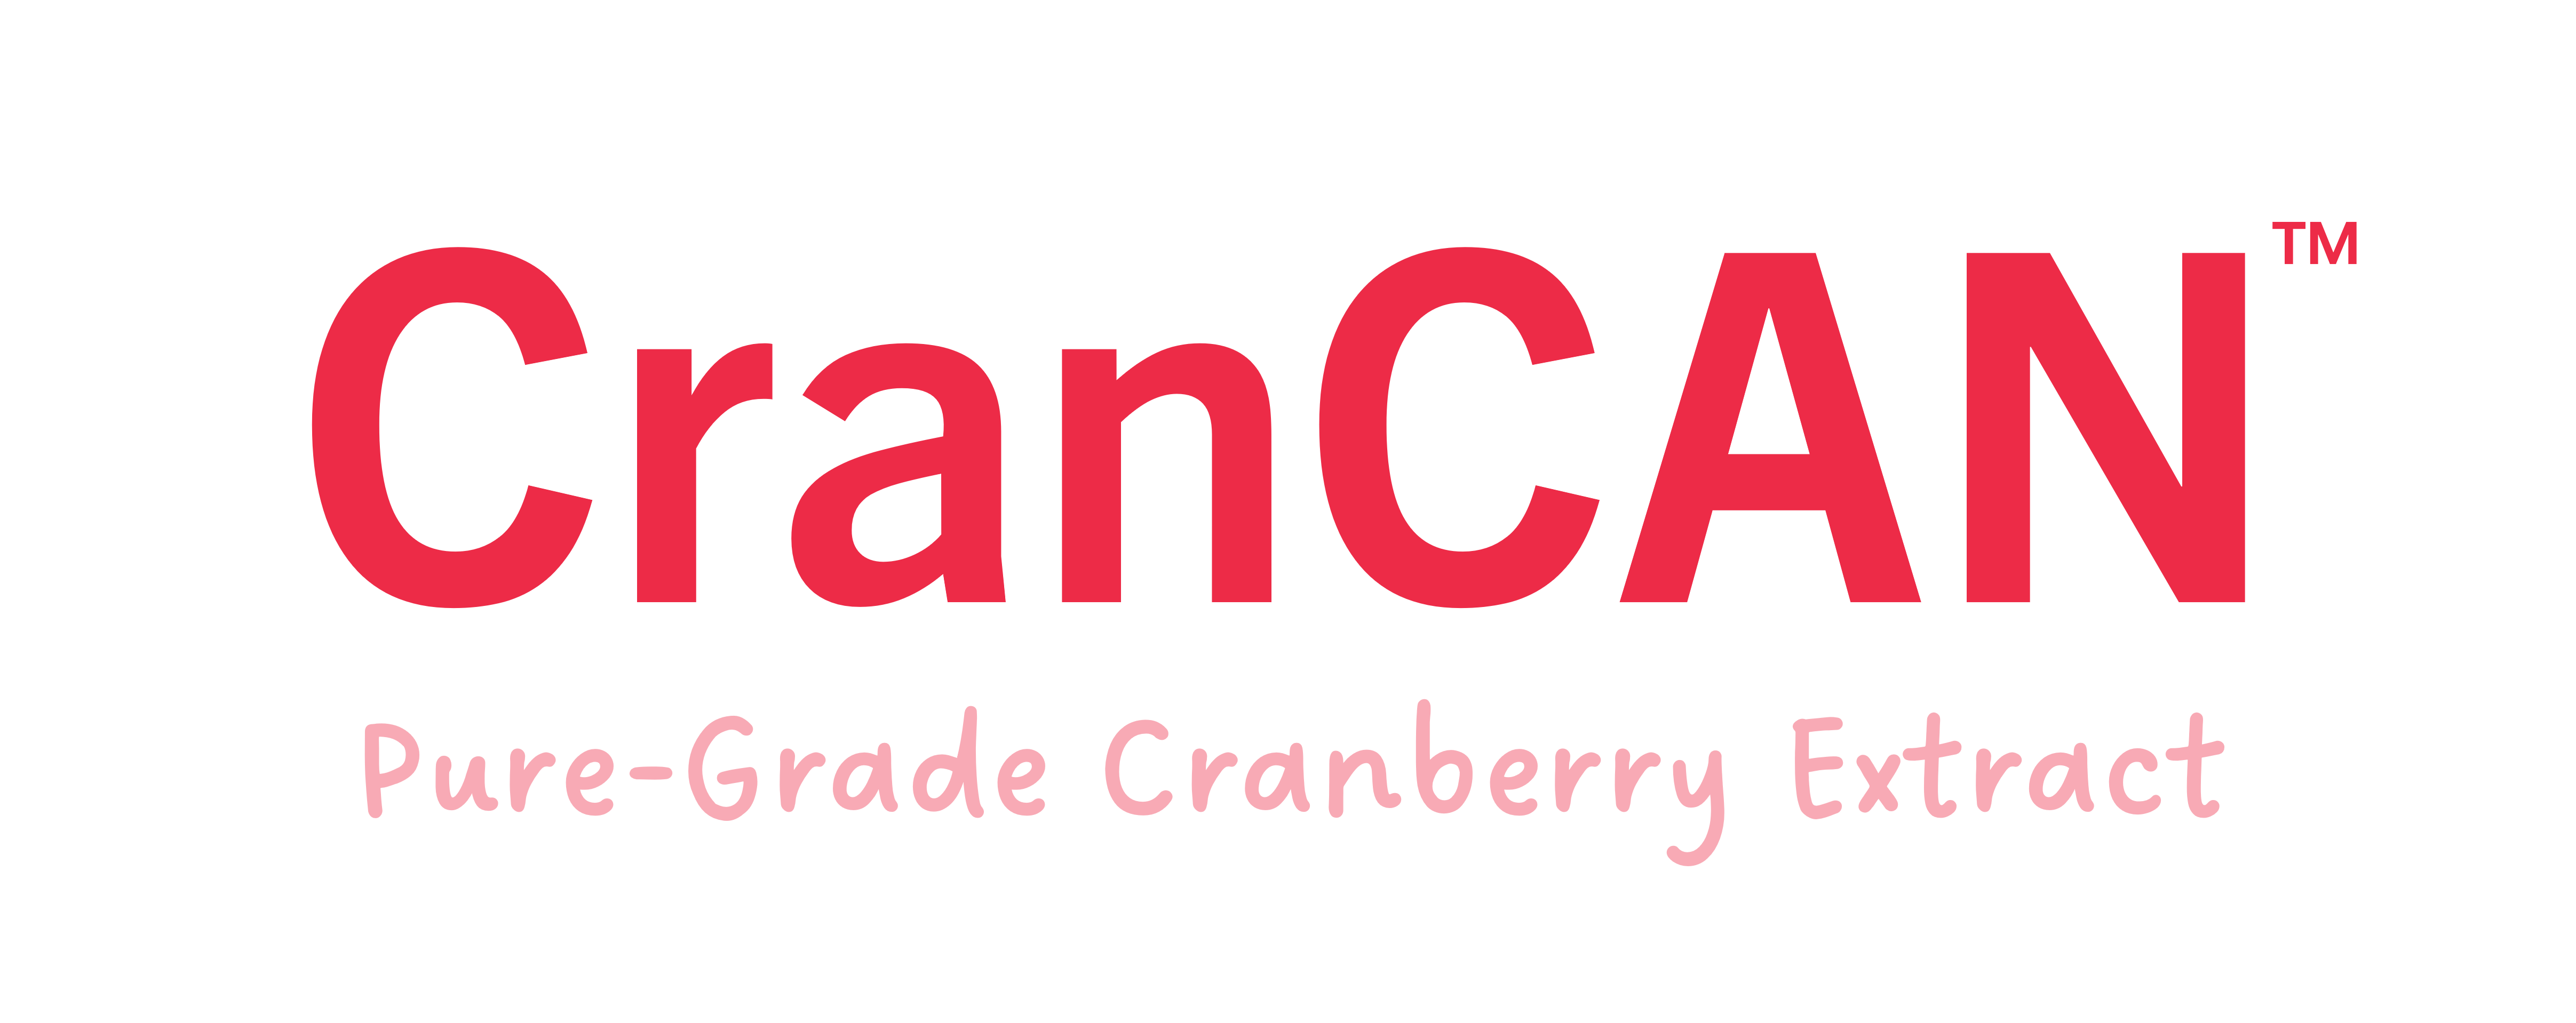 保健食品原料-蔓越莓萃取物-CranCAN-logo